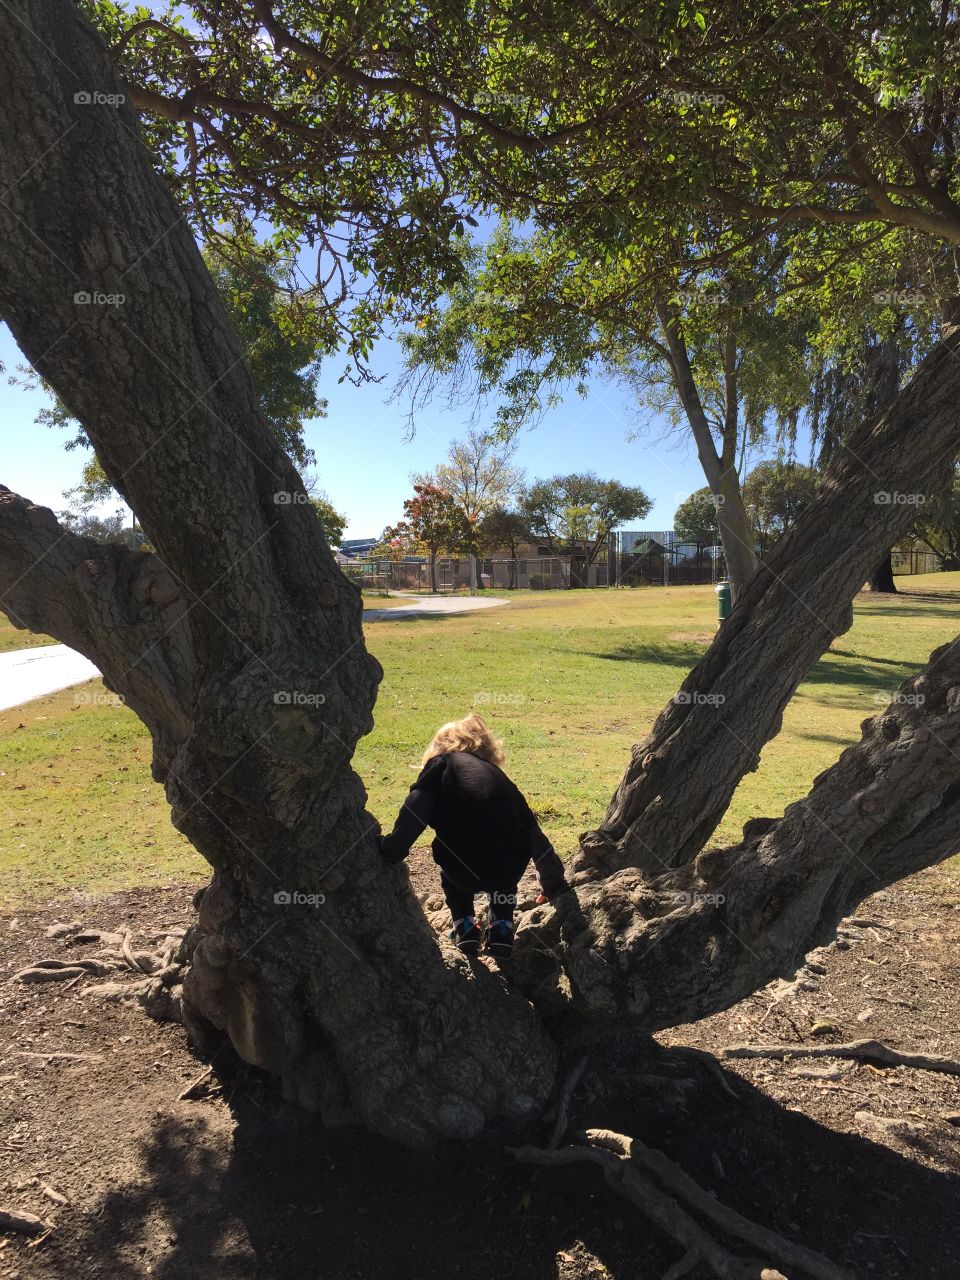 Child on a tree